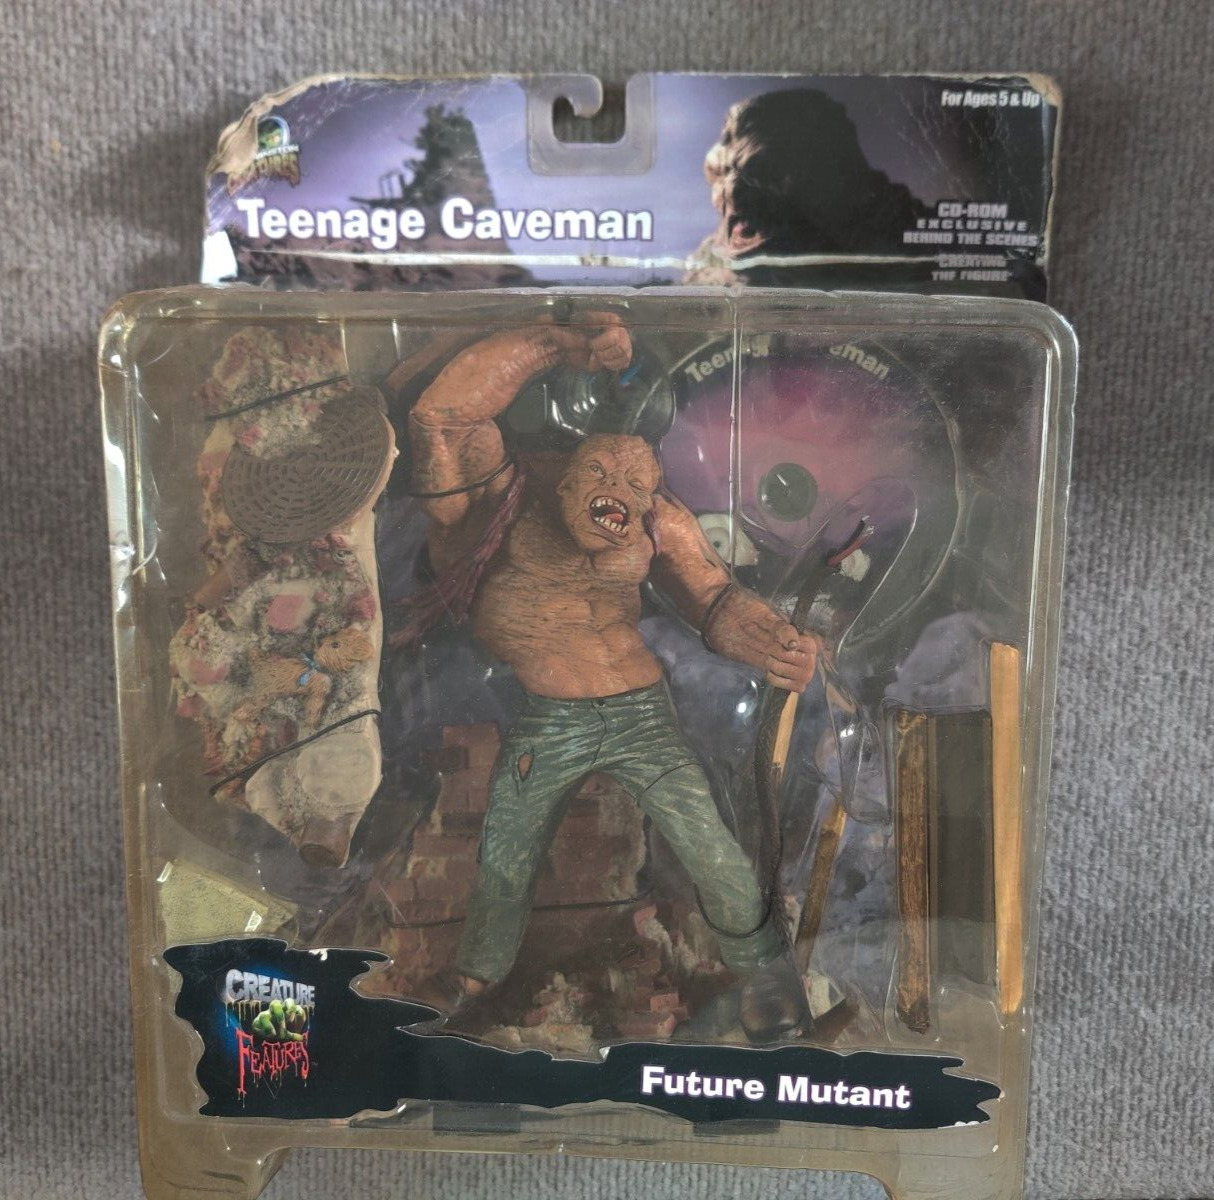 VTG Teenage Caveman Stan Winston Creature Feature Future Mutant Action Figure